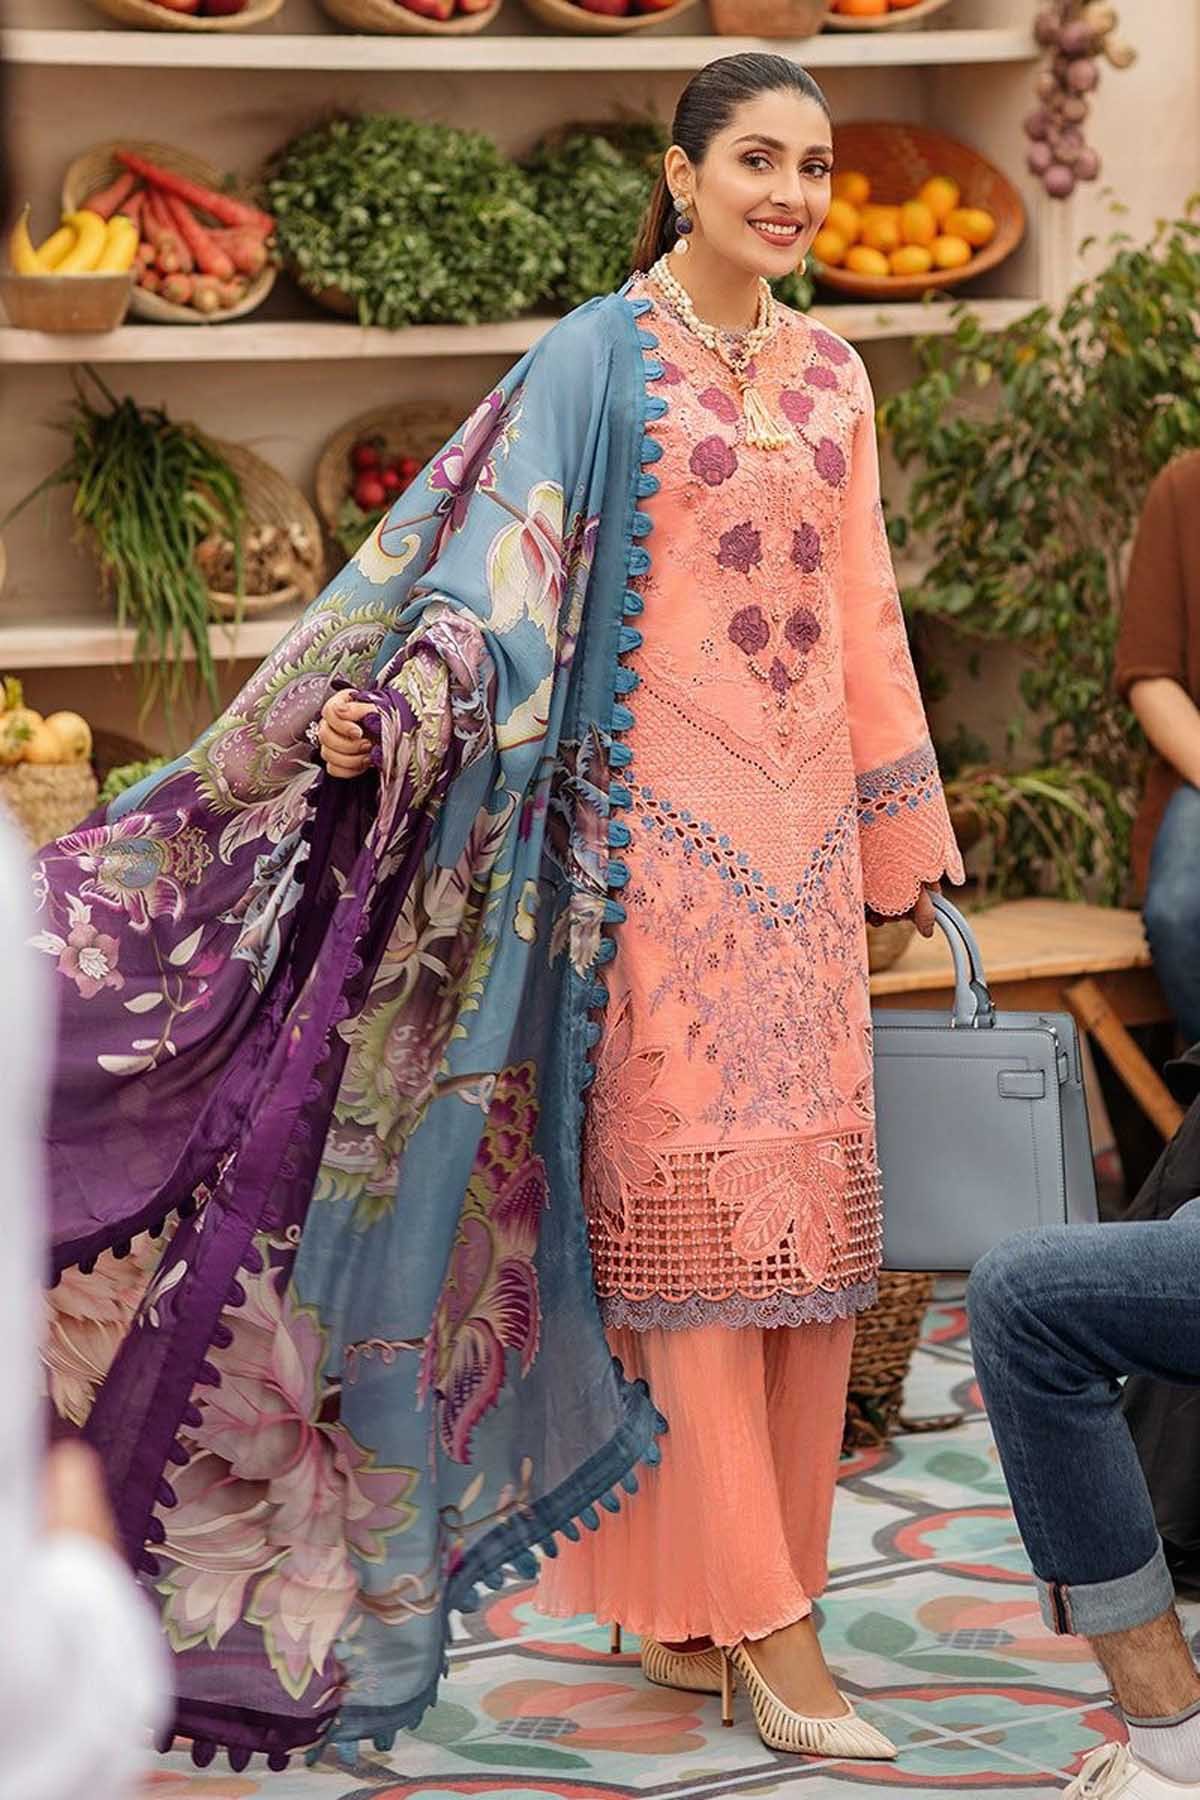 Mushq women new dress design pakistan top clothing brand sale fashion trending girls suit